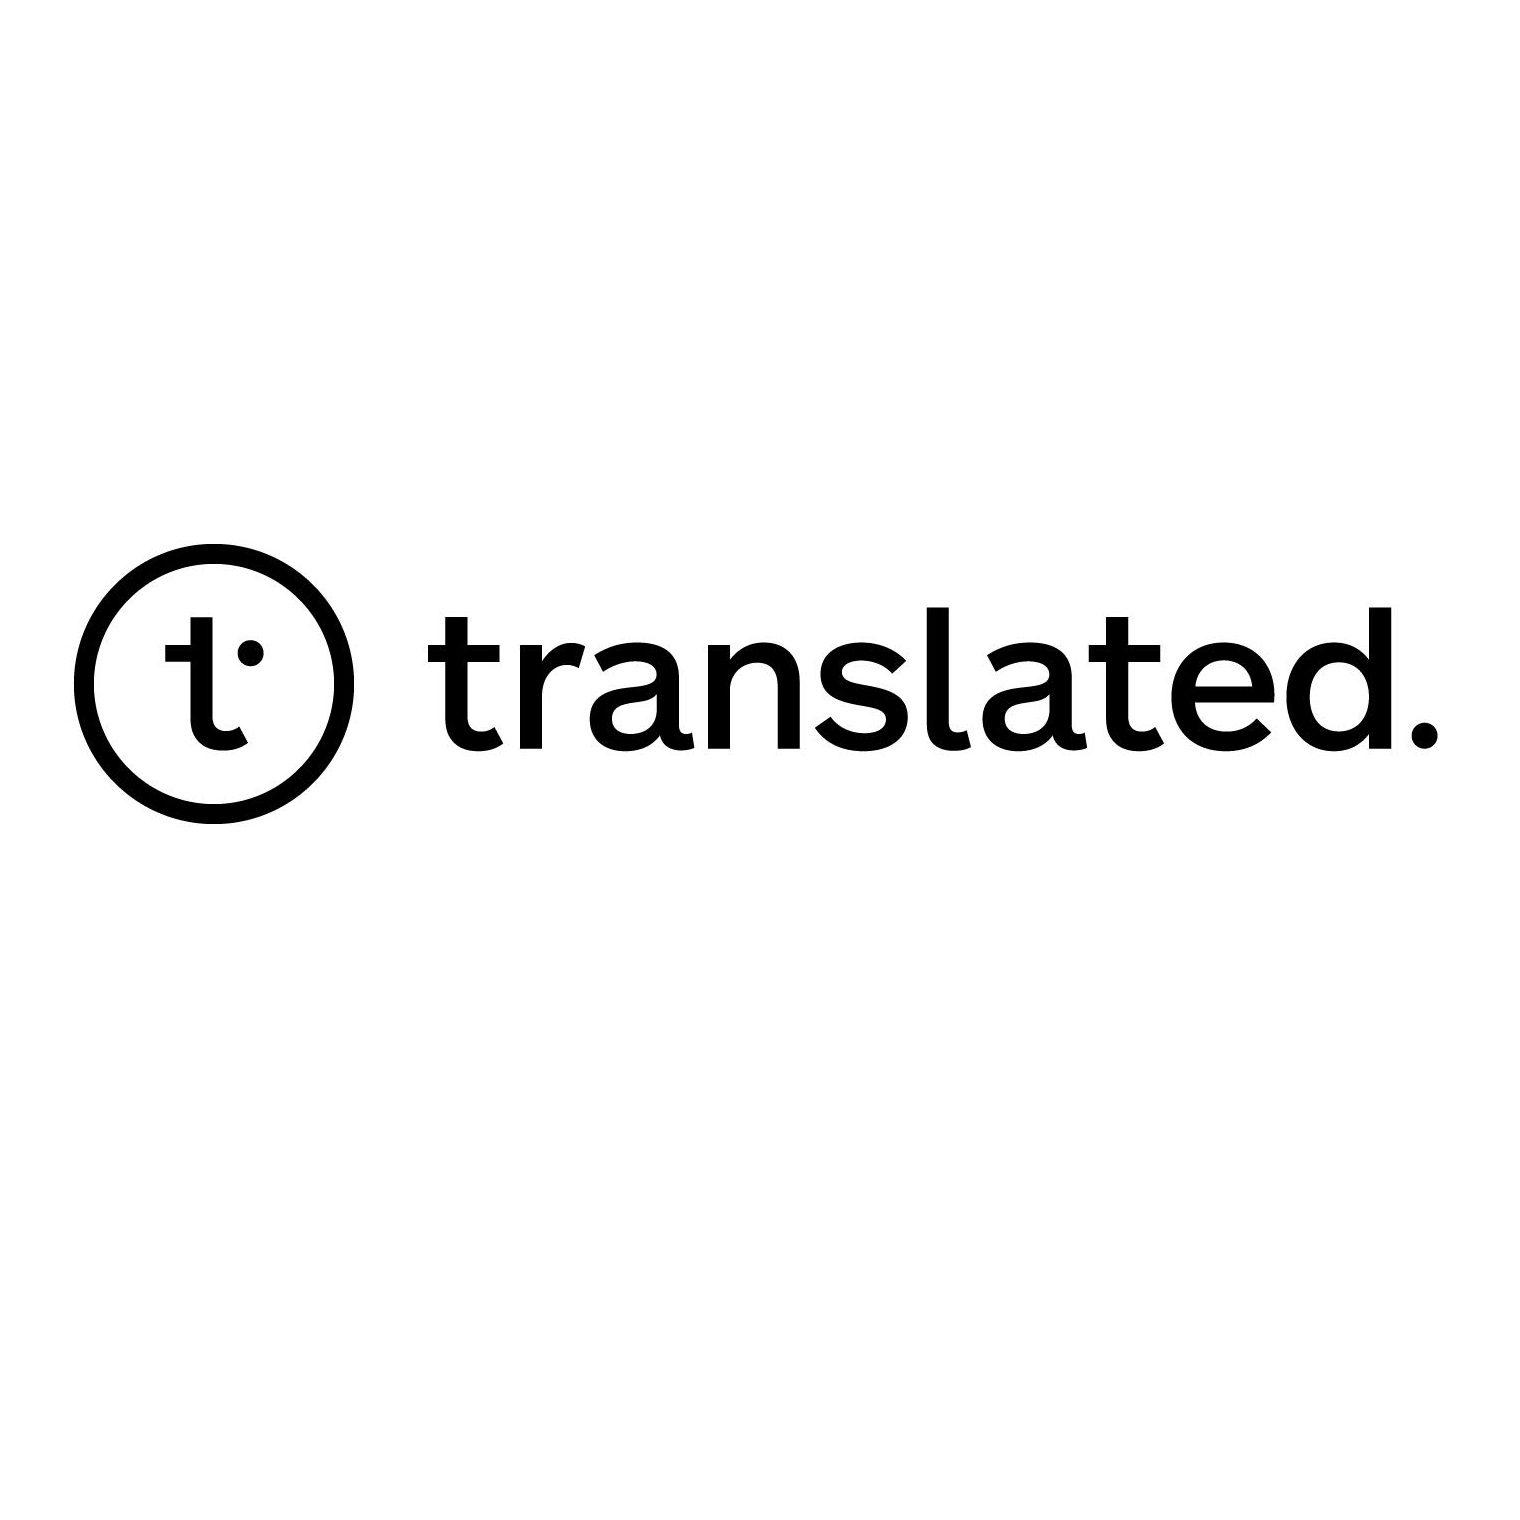 Translated